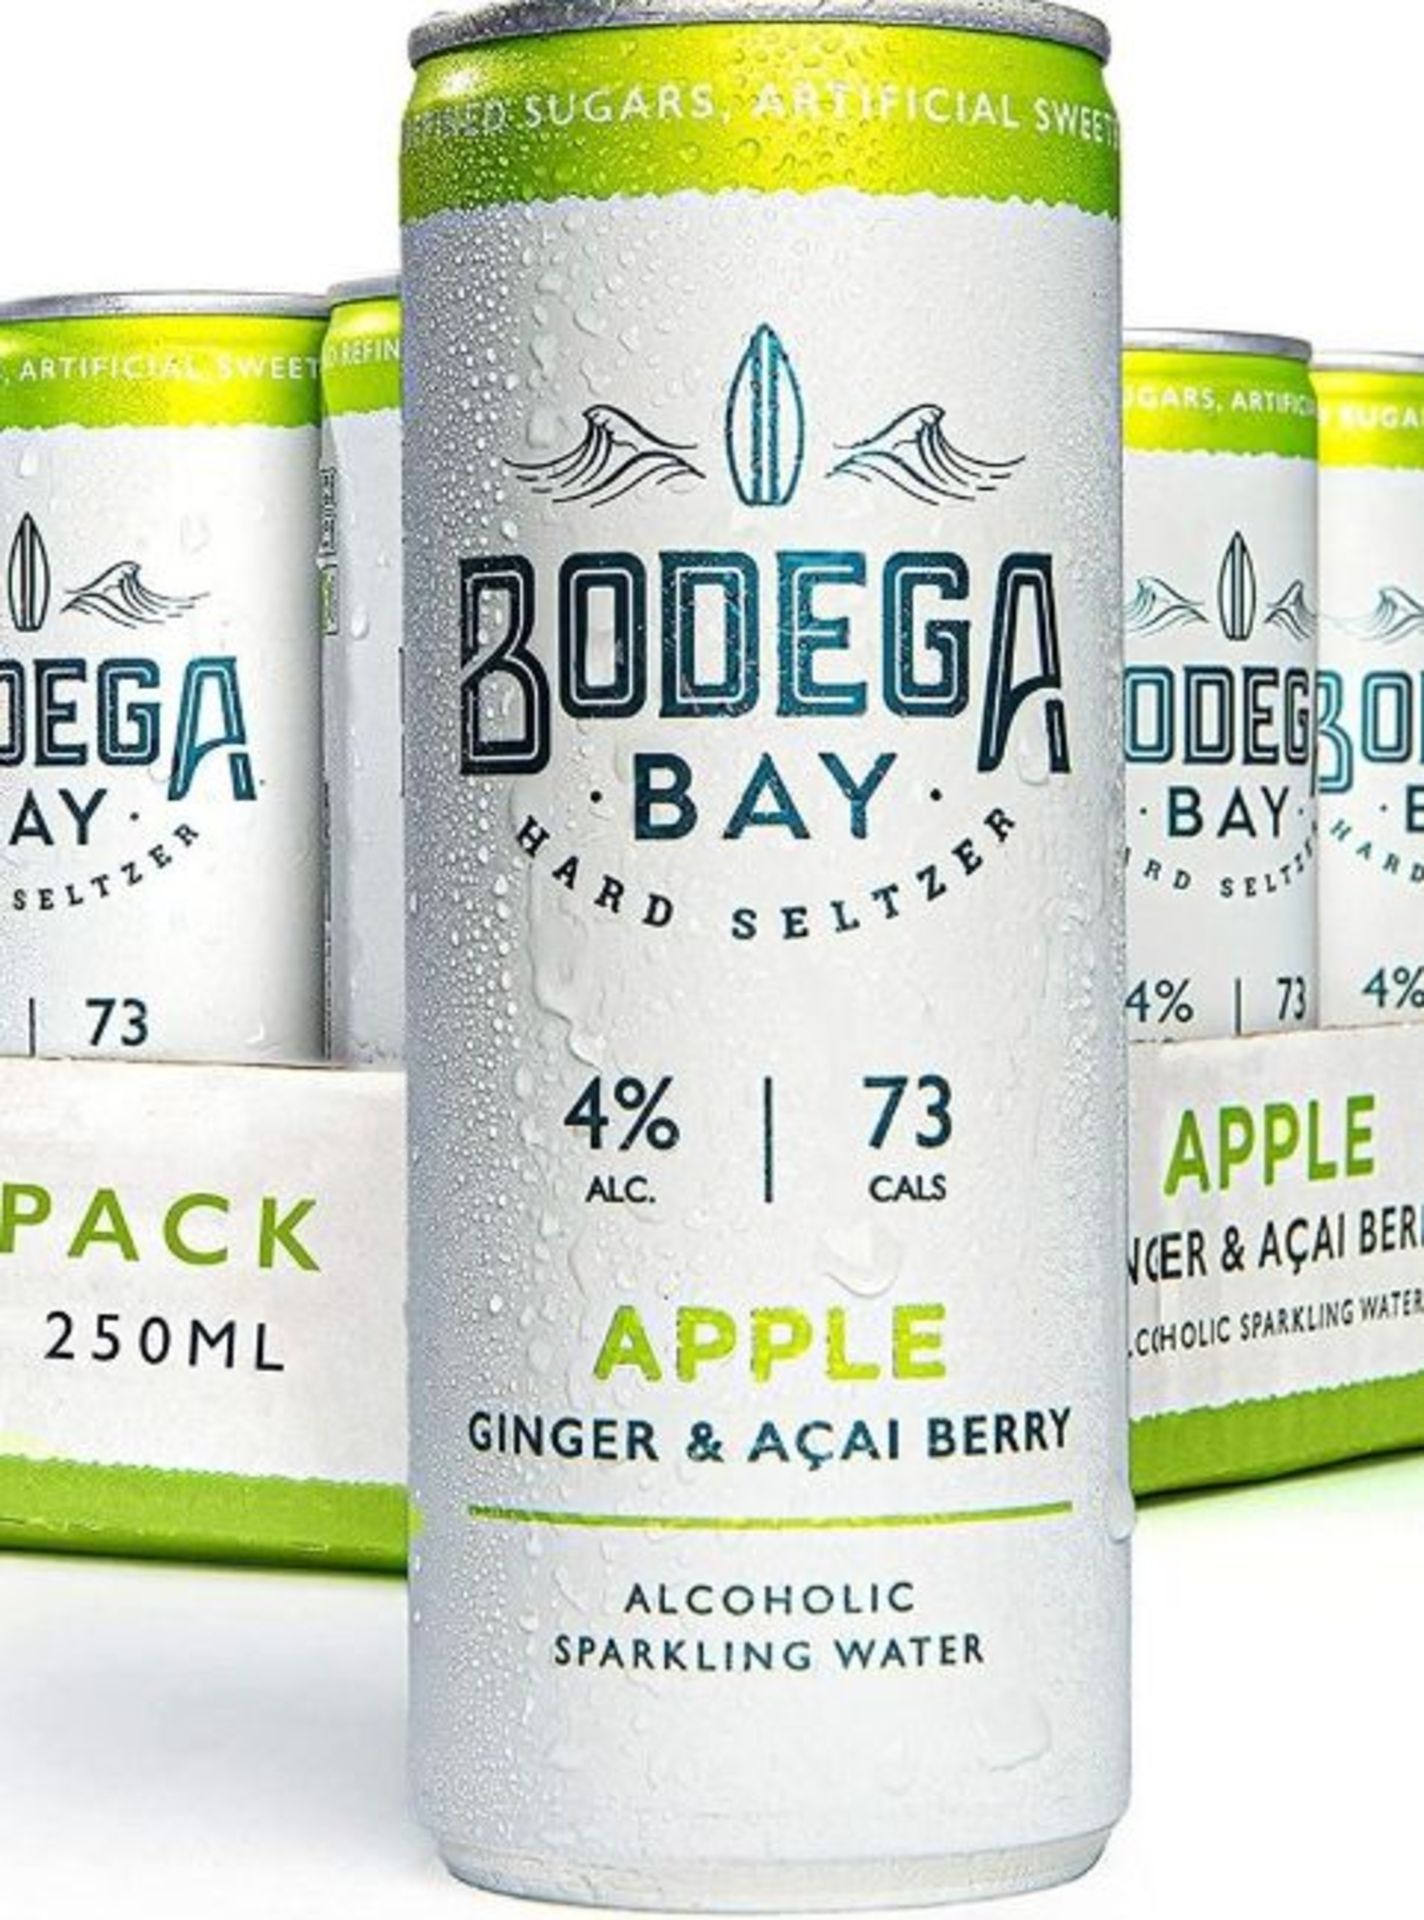 24 x Bodega Bay Hard Seltzer 250ml Alcoholic Sparkling Water Drinks - Apple Ginger & Acai Berry - Image 6 of 9